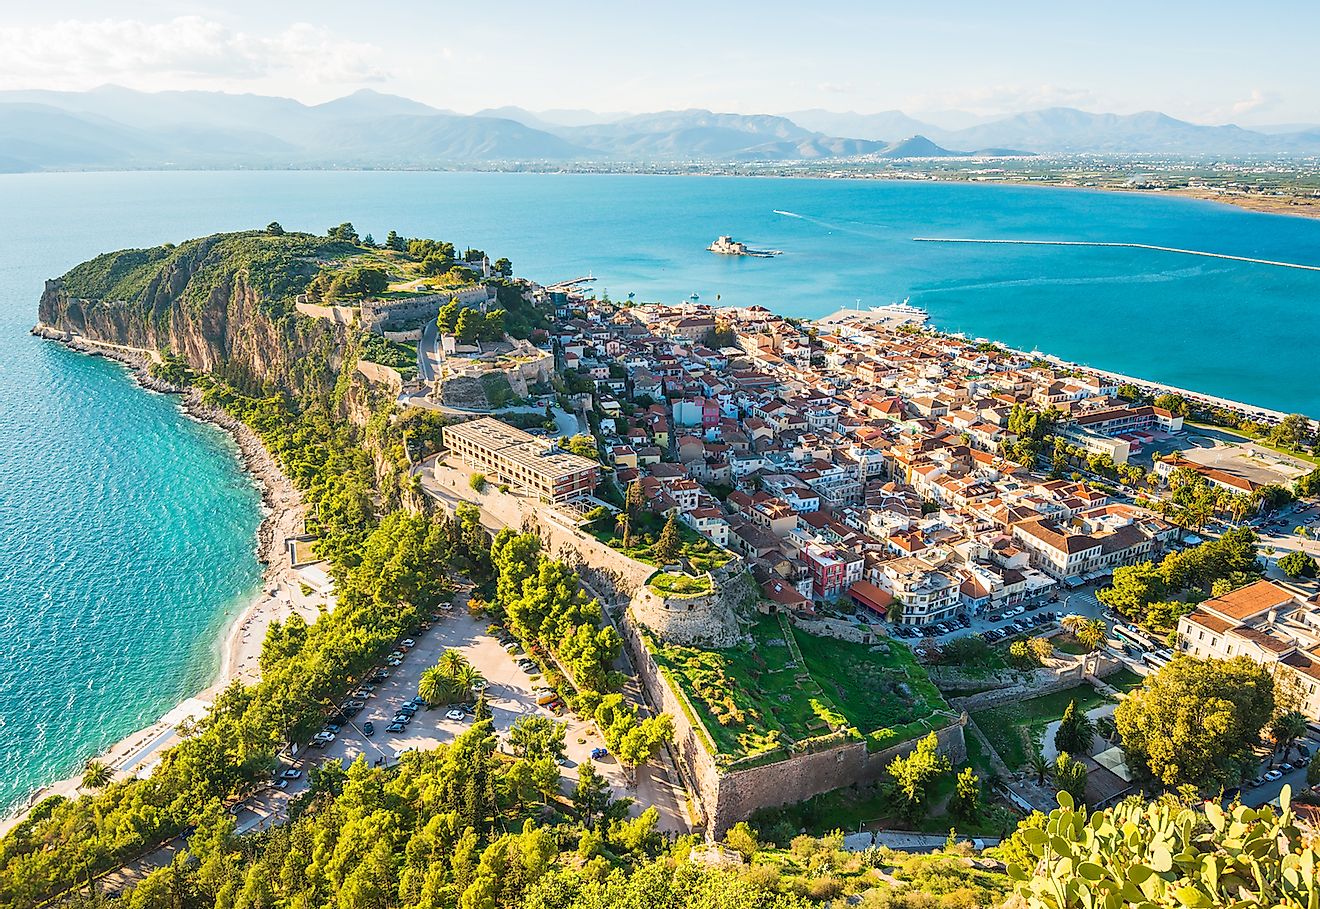 Green peninsula with Nafplion city in Greece. Image credit: Olga Kot Photo/Shutterstock.com